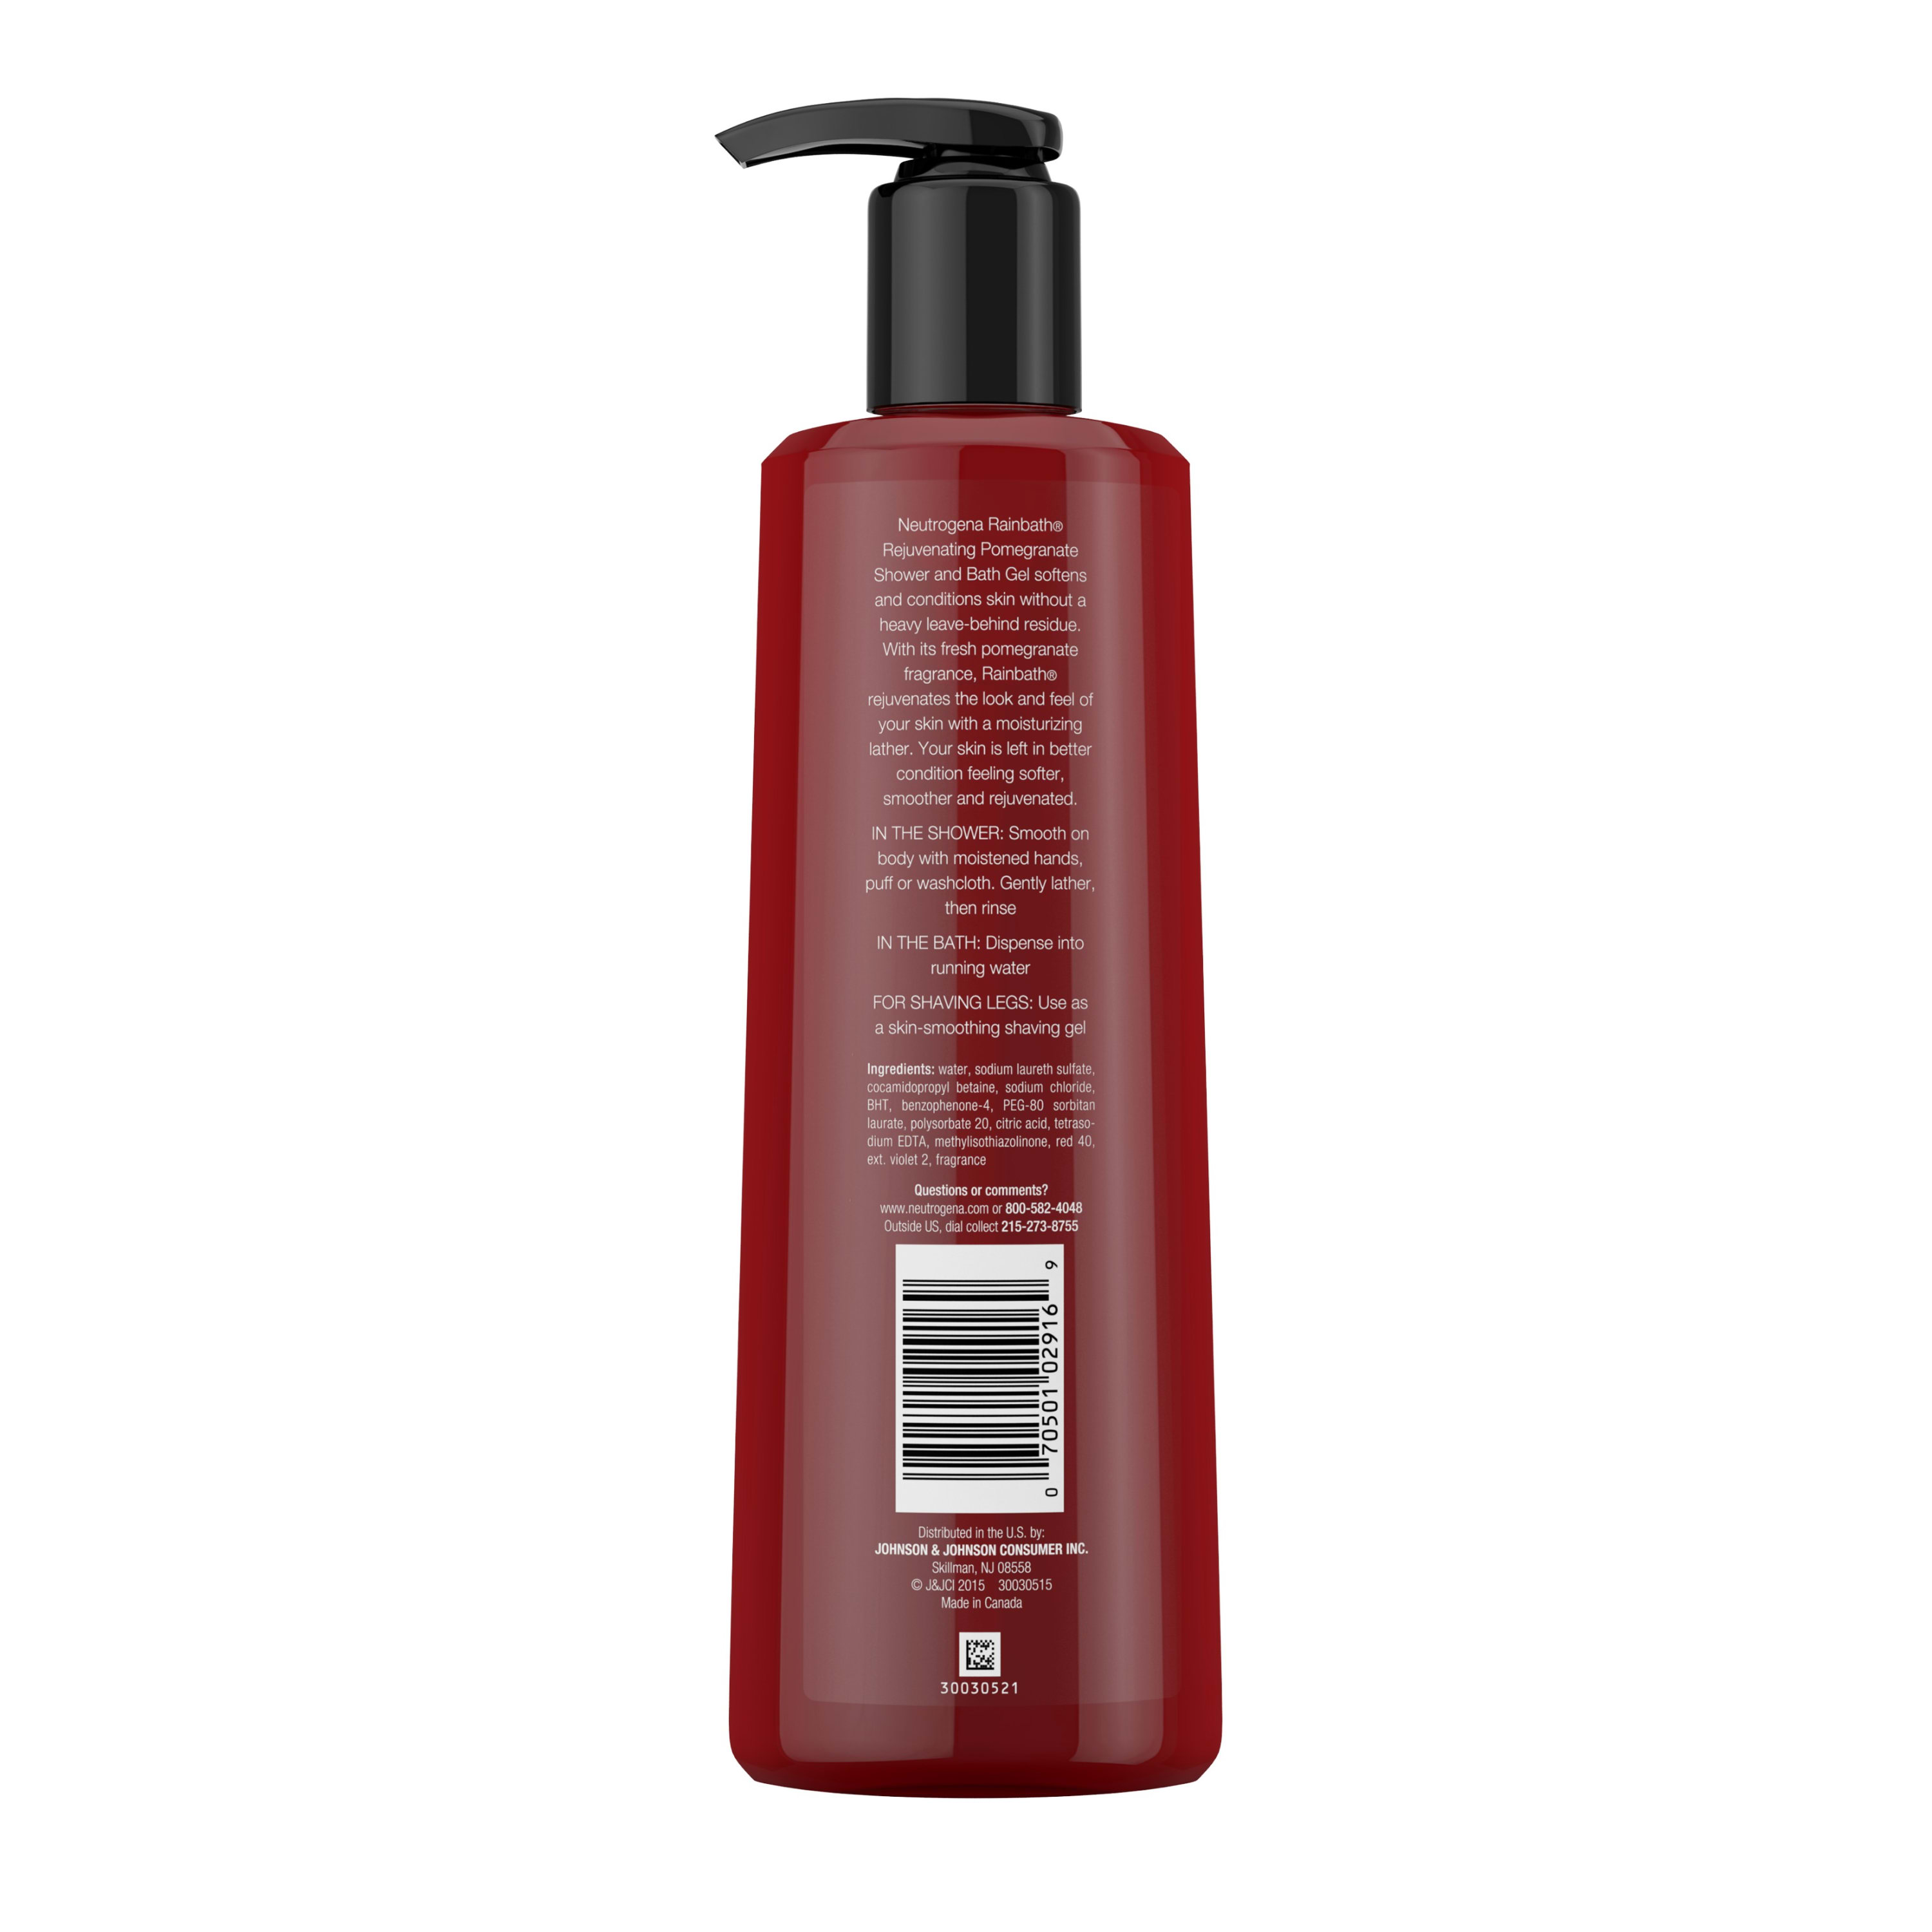 Neutrogena Rainbath Rejuvenating Shower/Bath Gel, Pomegranate, 16 oz - image 14 of 16